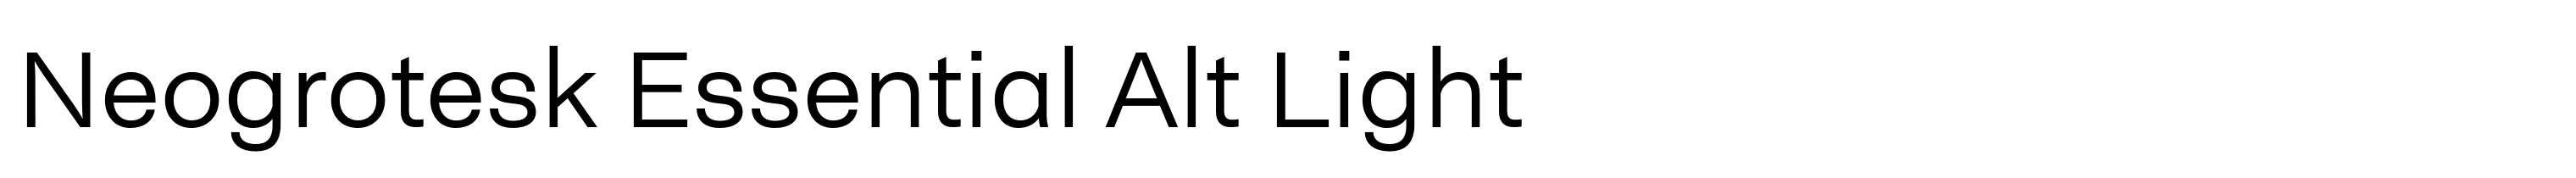 Neogrotesk Essential Alt Light